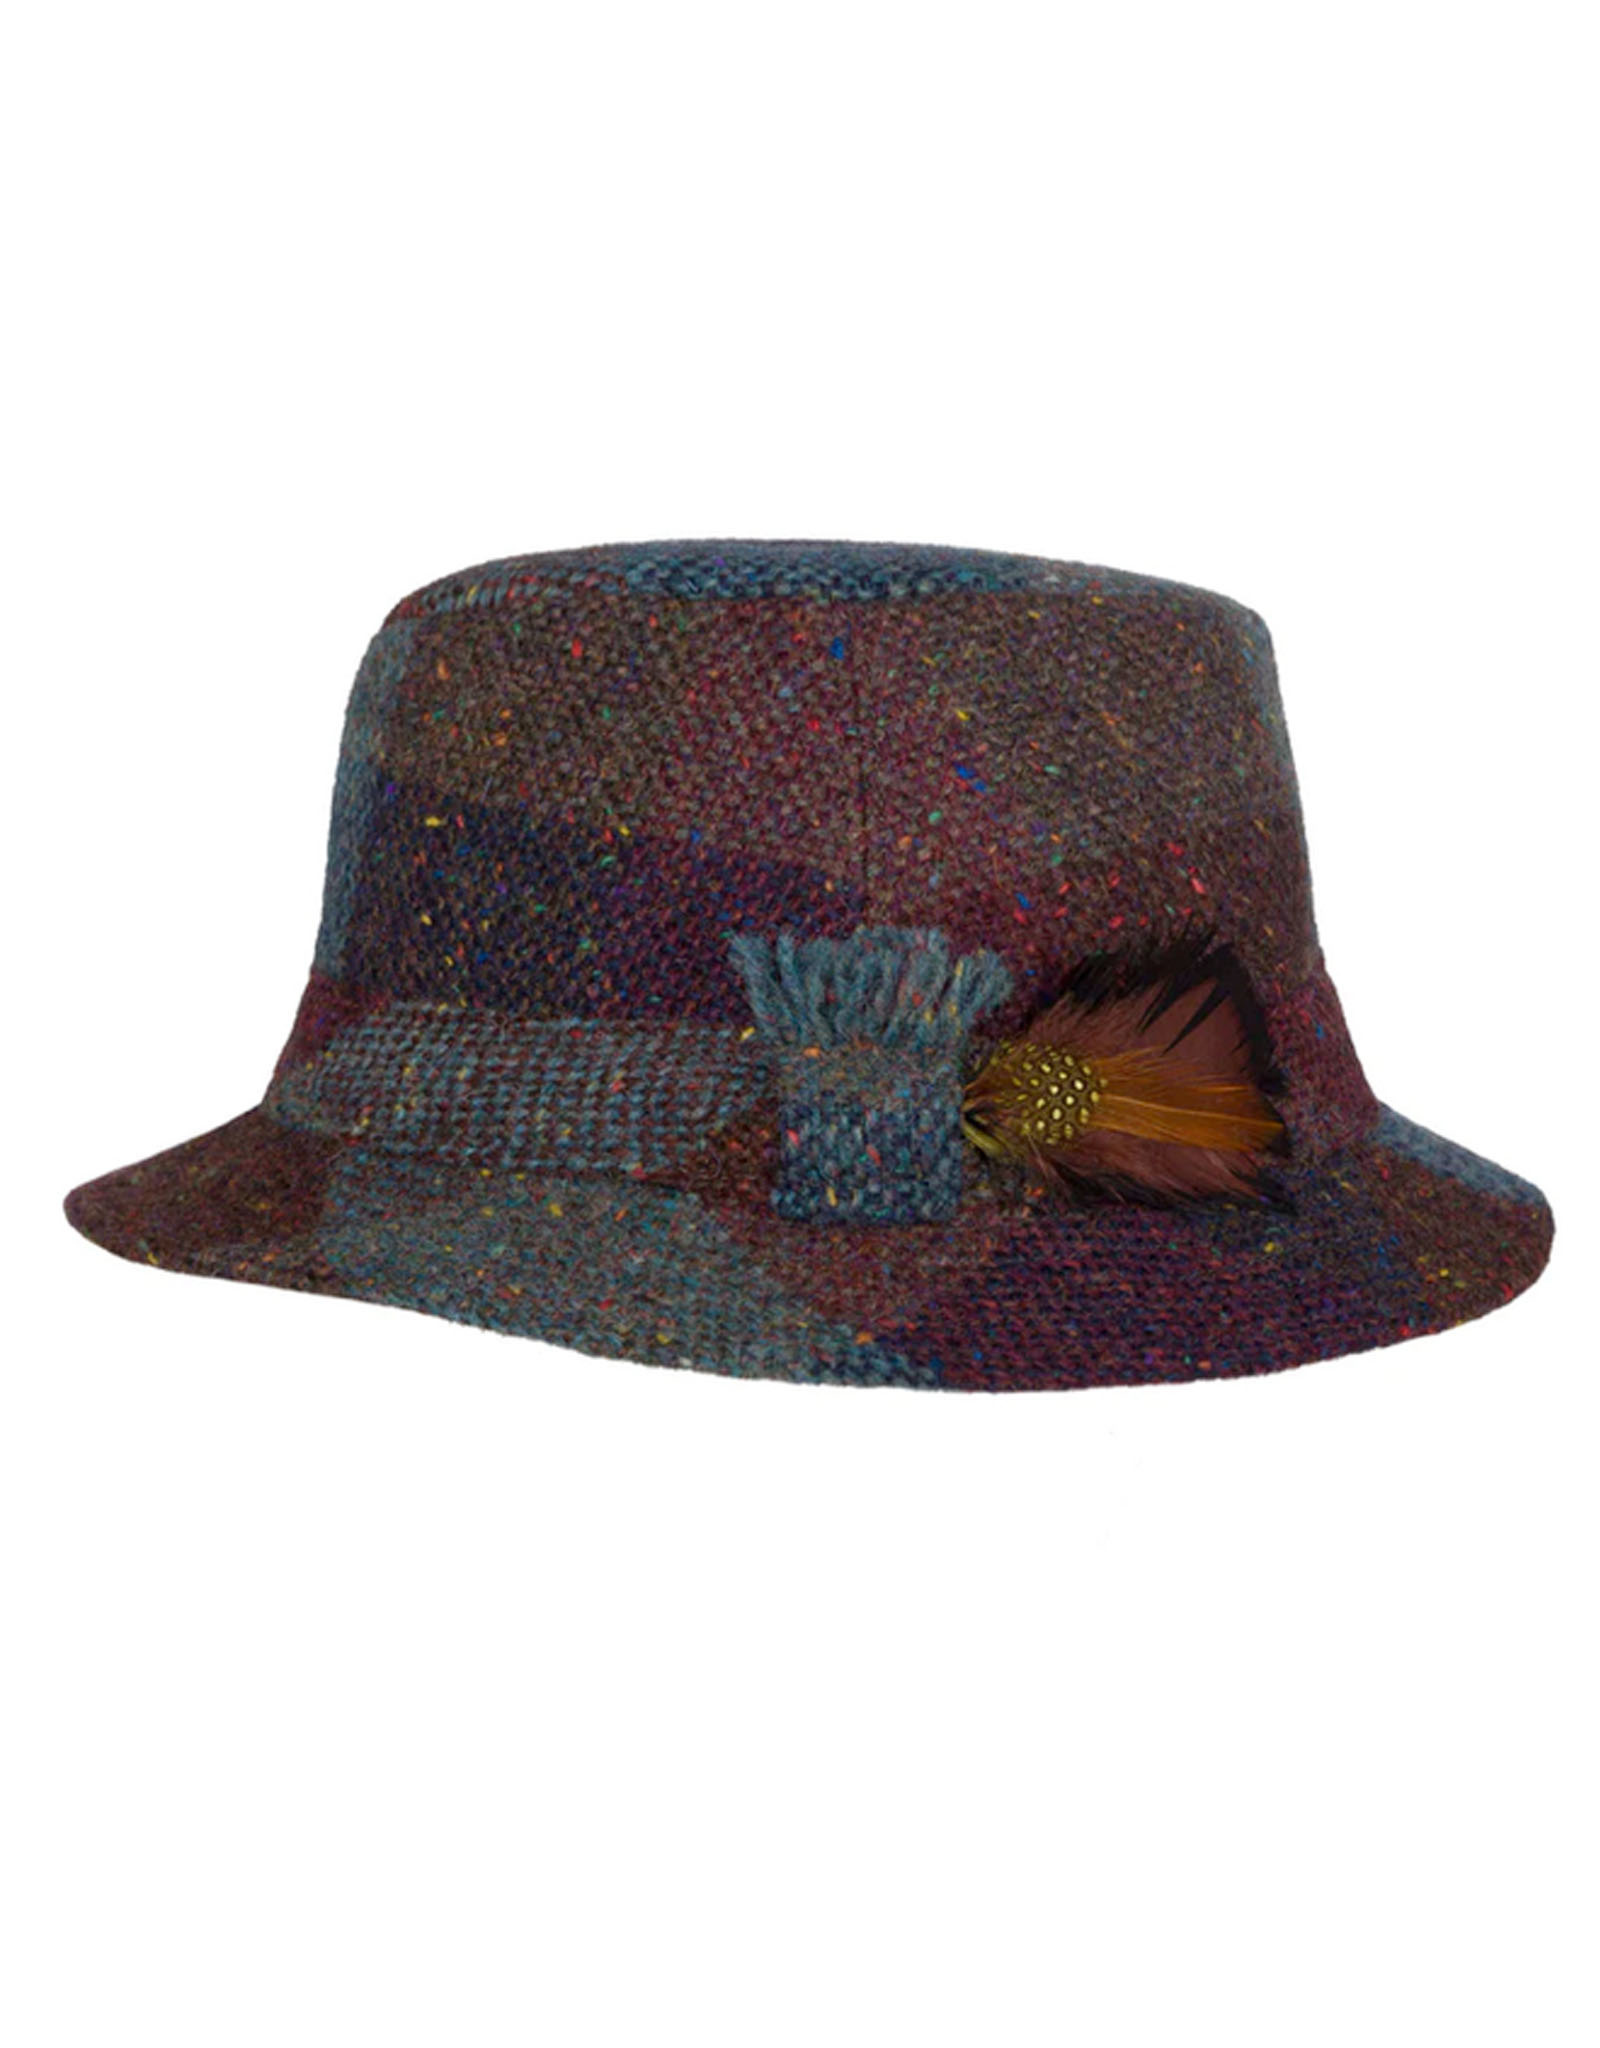 CAPS & HATS WALKING WOOL TWEED HANNA HAT - Autumnal Patchwork S&P